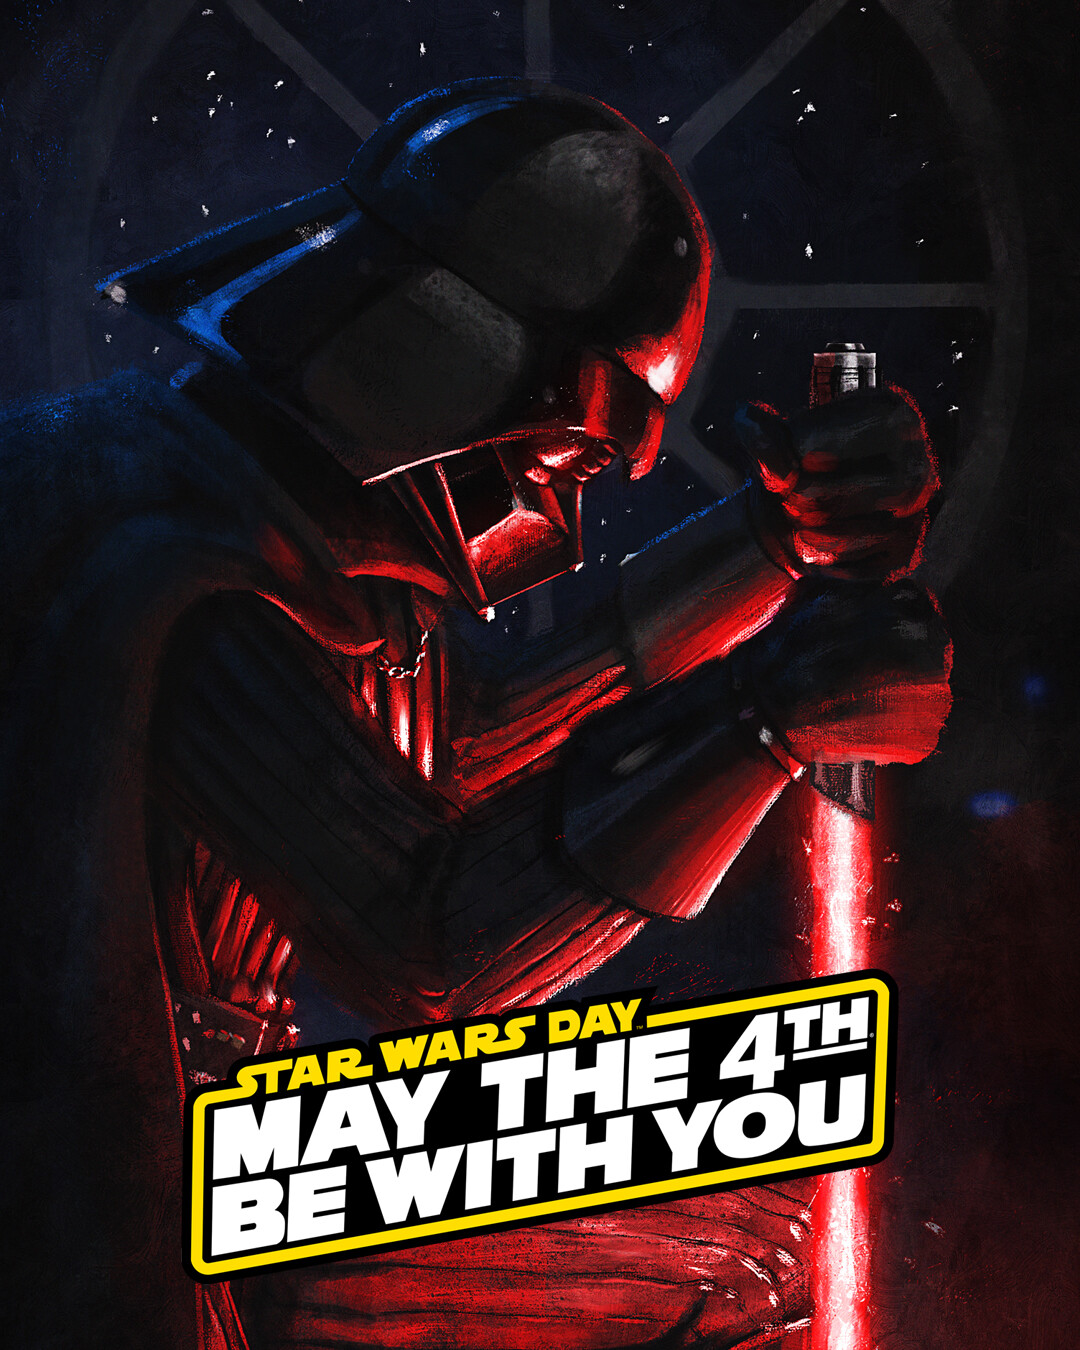 Darth Vador - Star Wars fan art - May the 4th